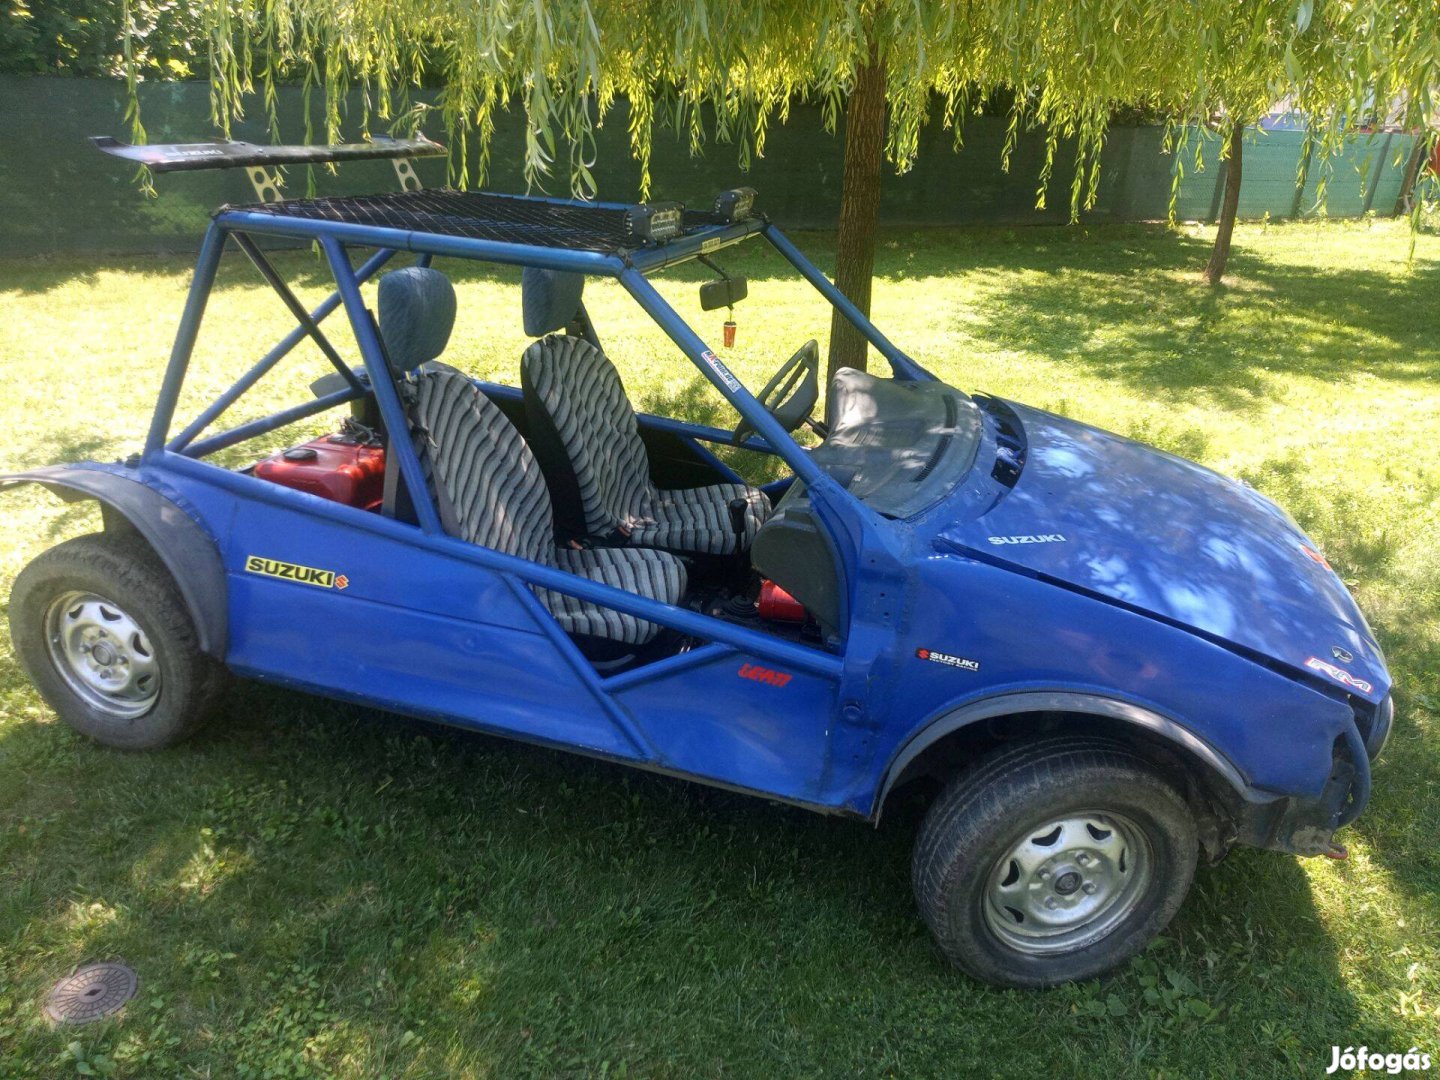 Suzuki buggy, homokfutó